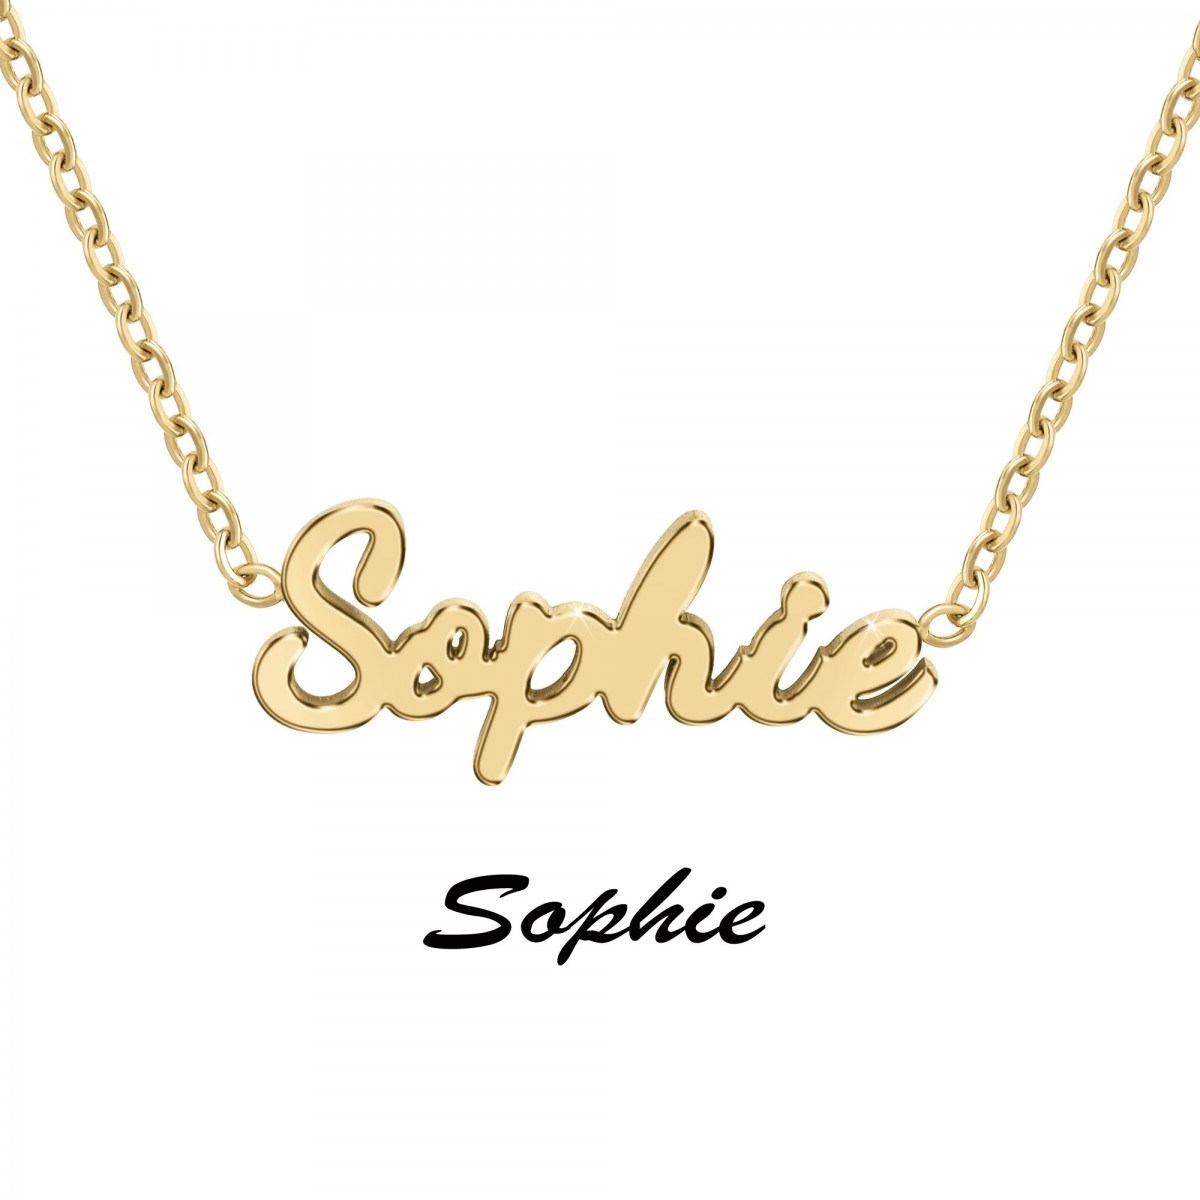 Sophie - Collier prénom - vue 3